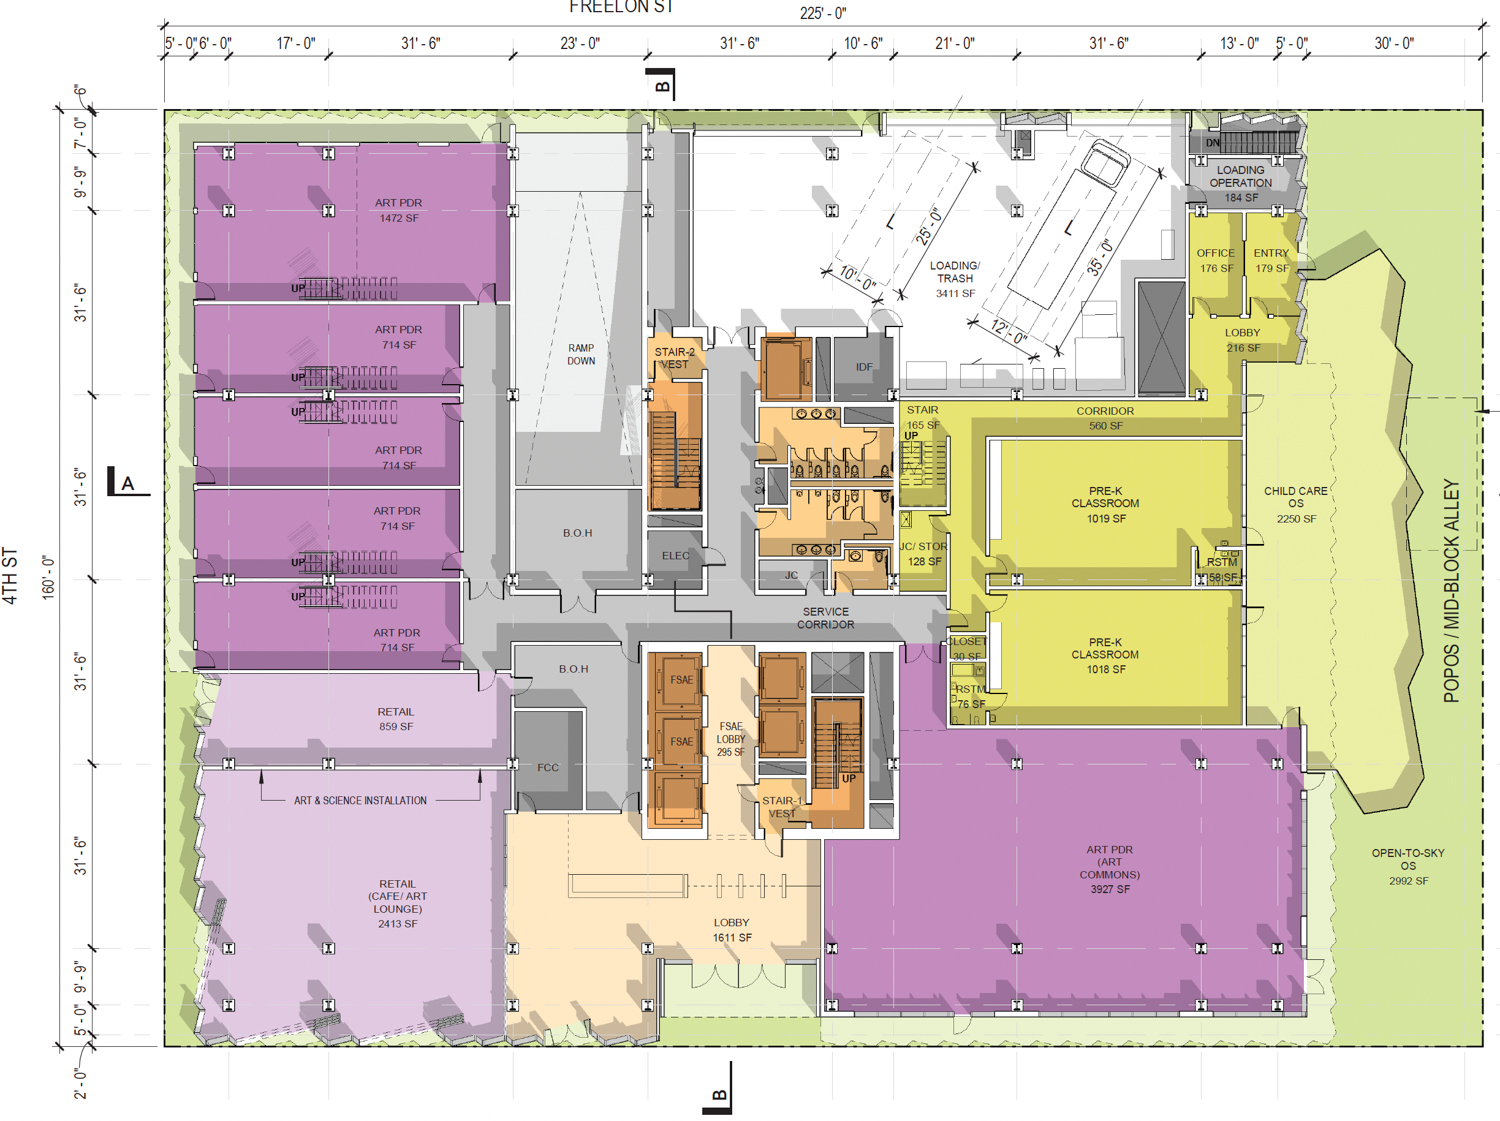 490 Brannan Street floor plan, drawing by Perkins&Will